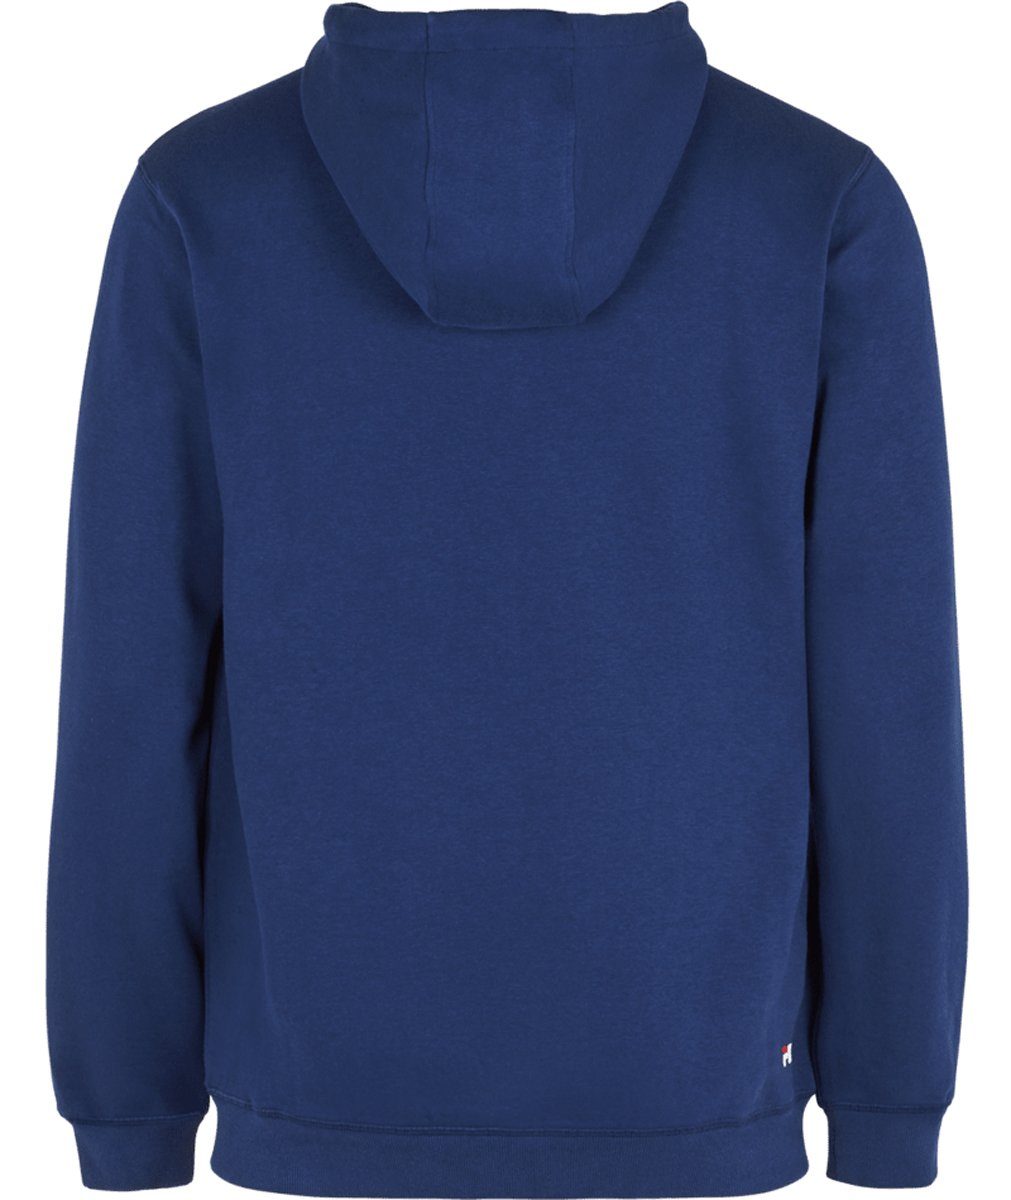 BARUMINI Hoodie Blau Sweater hoody, - Fila Sweatshirt Unisex